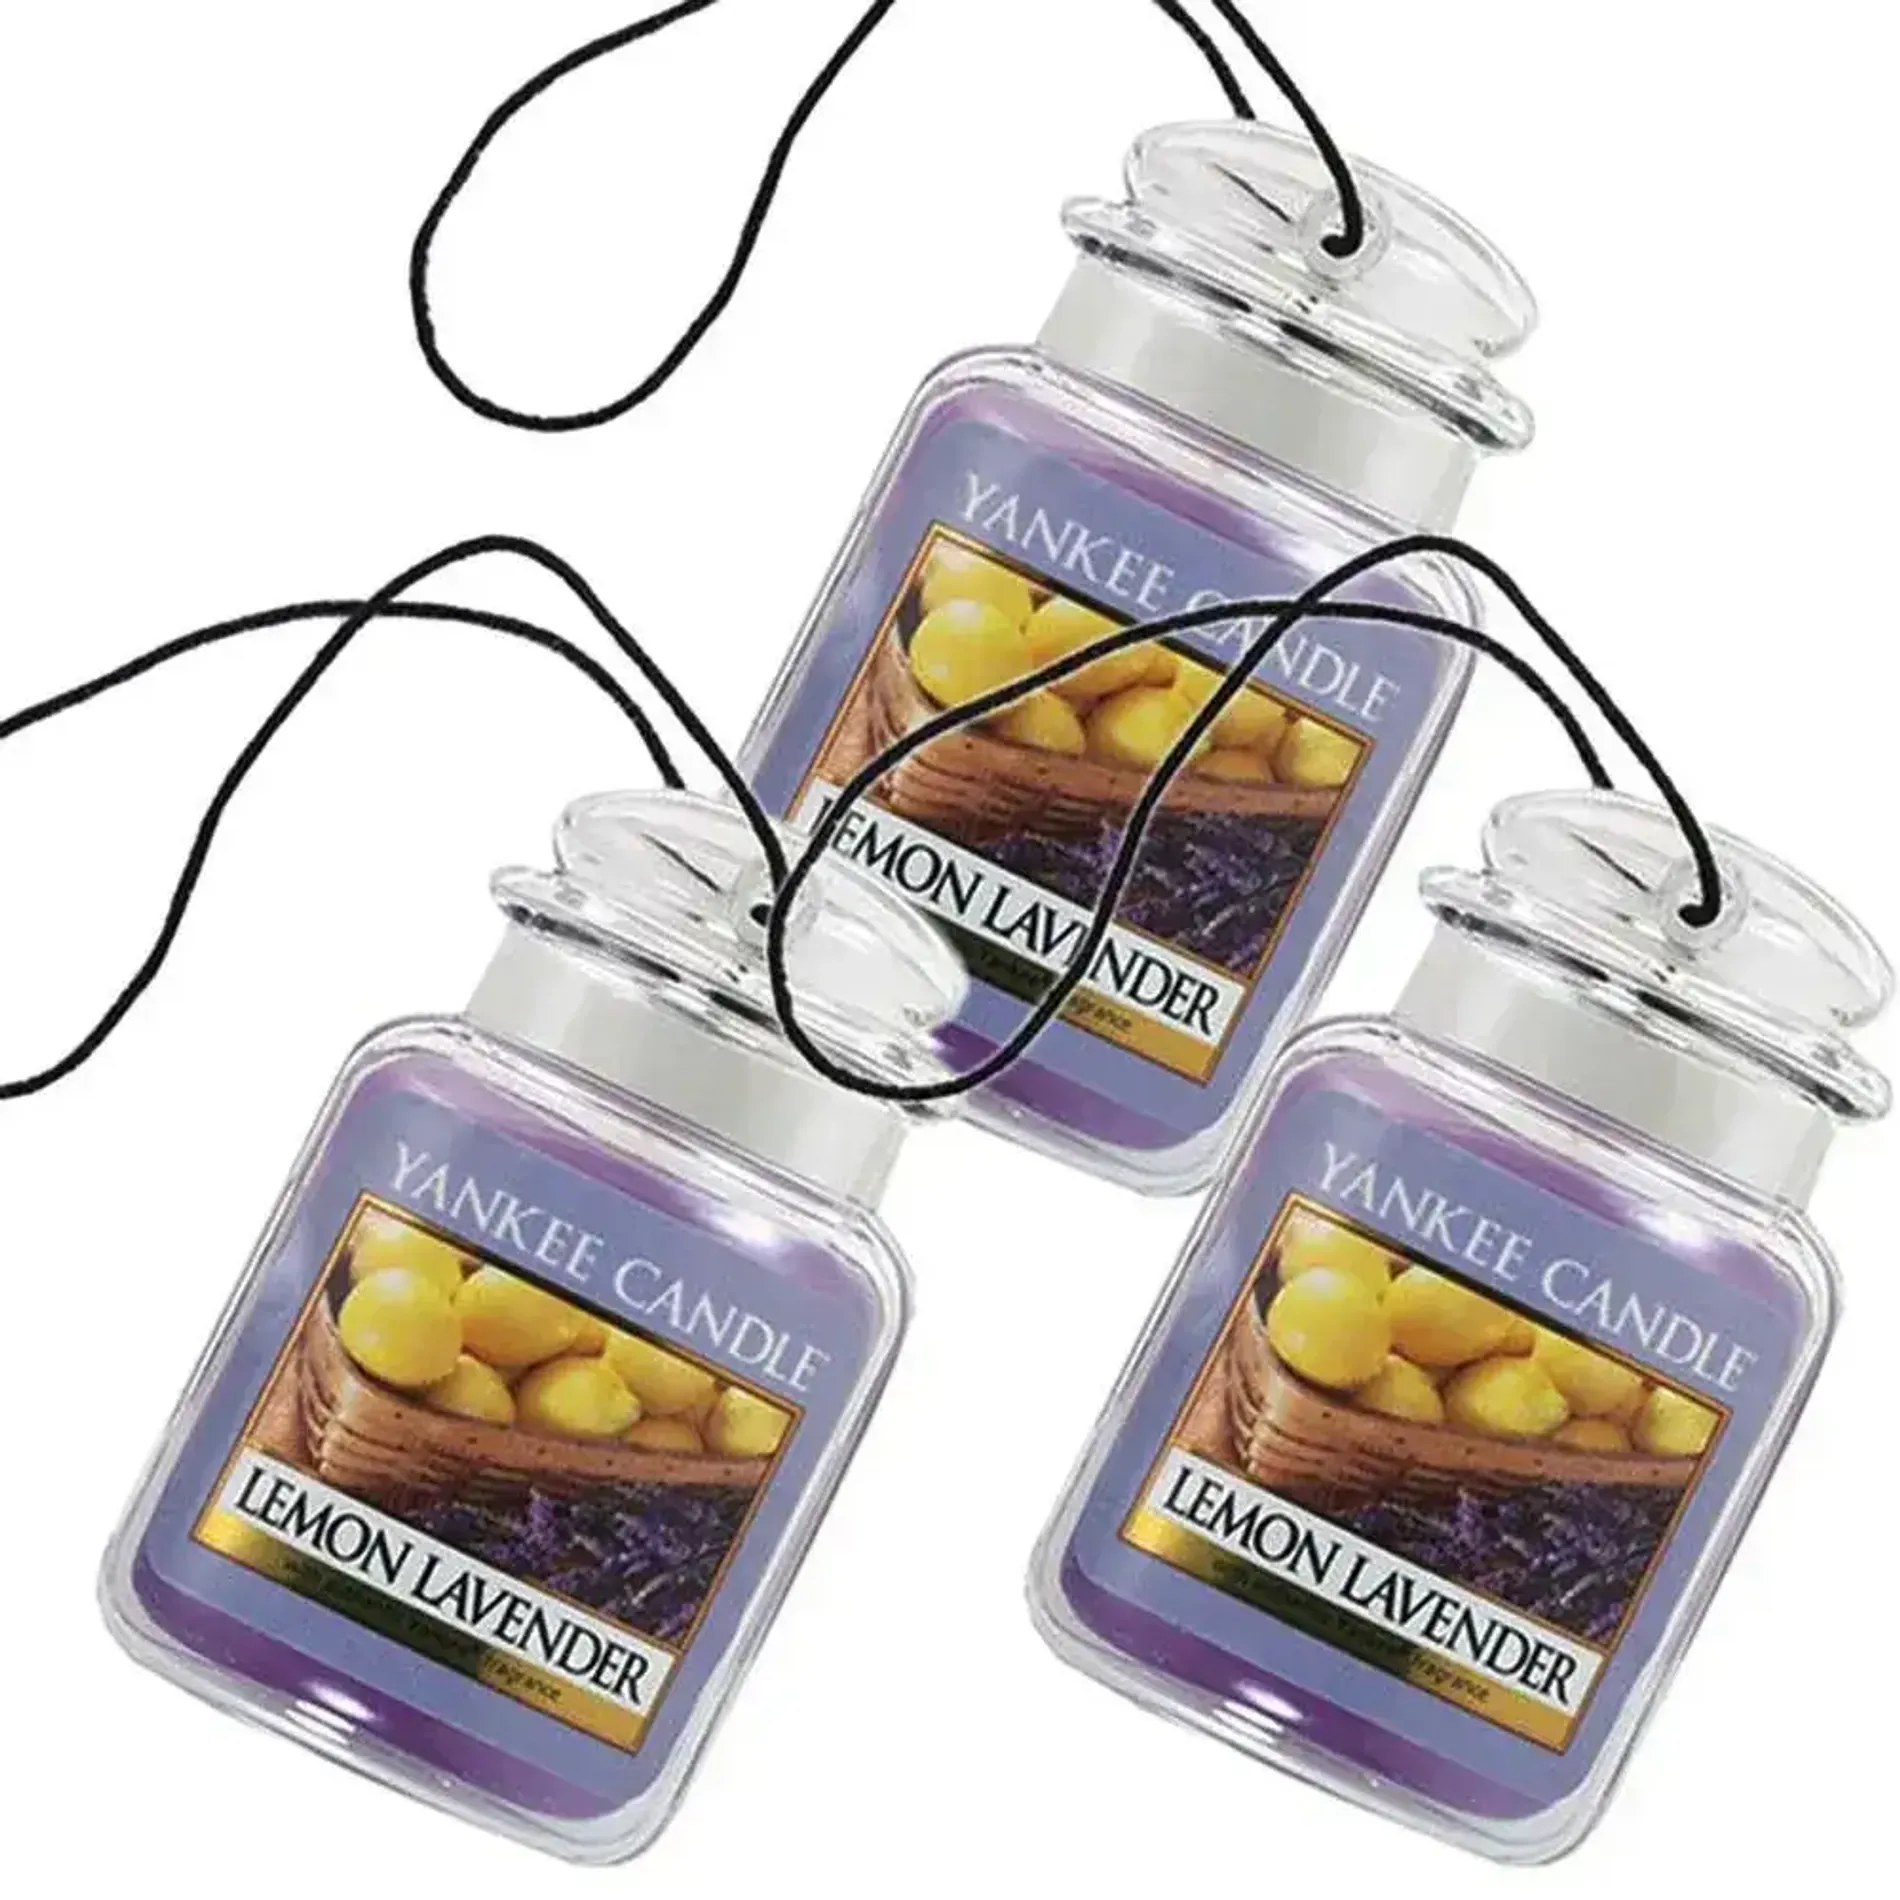 sap-thom-xe-huong-chanh-hoa-oai-huong-yankee-car-jar-ultimated-lemon-lavender-3